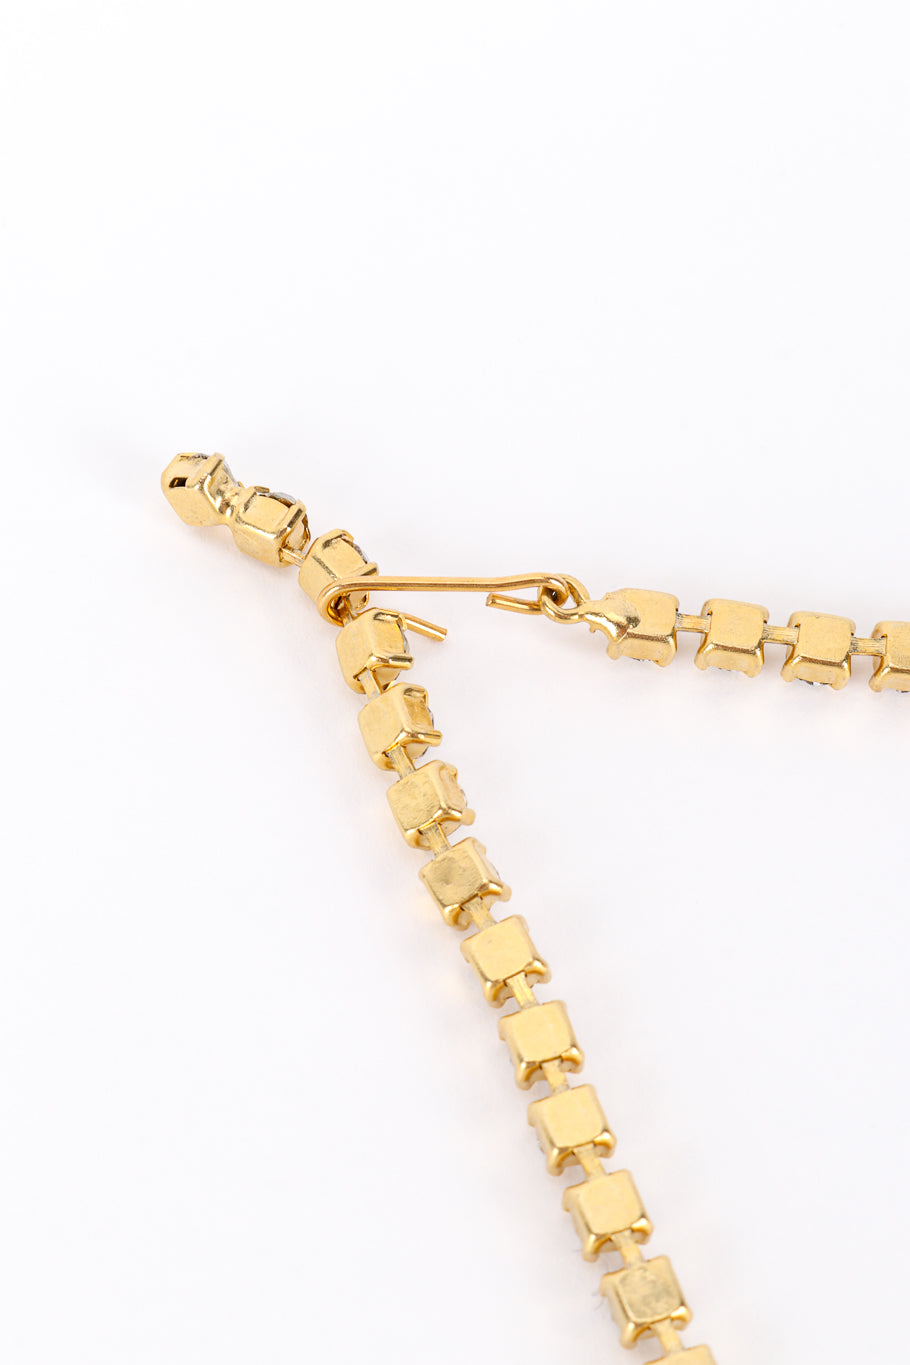 Vintage Crystal Marquise Cluster Necklace back of hook closure @recess la